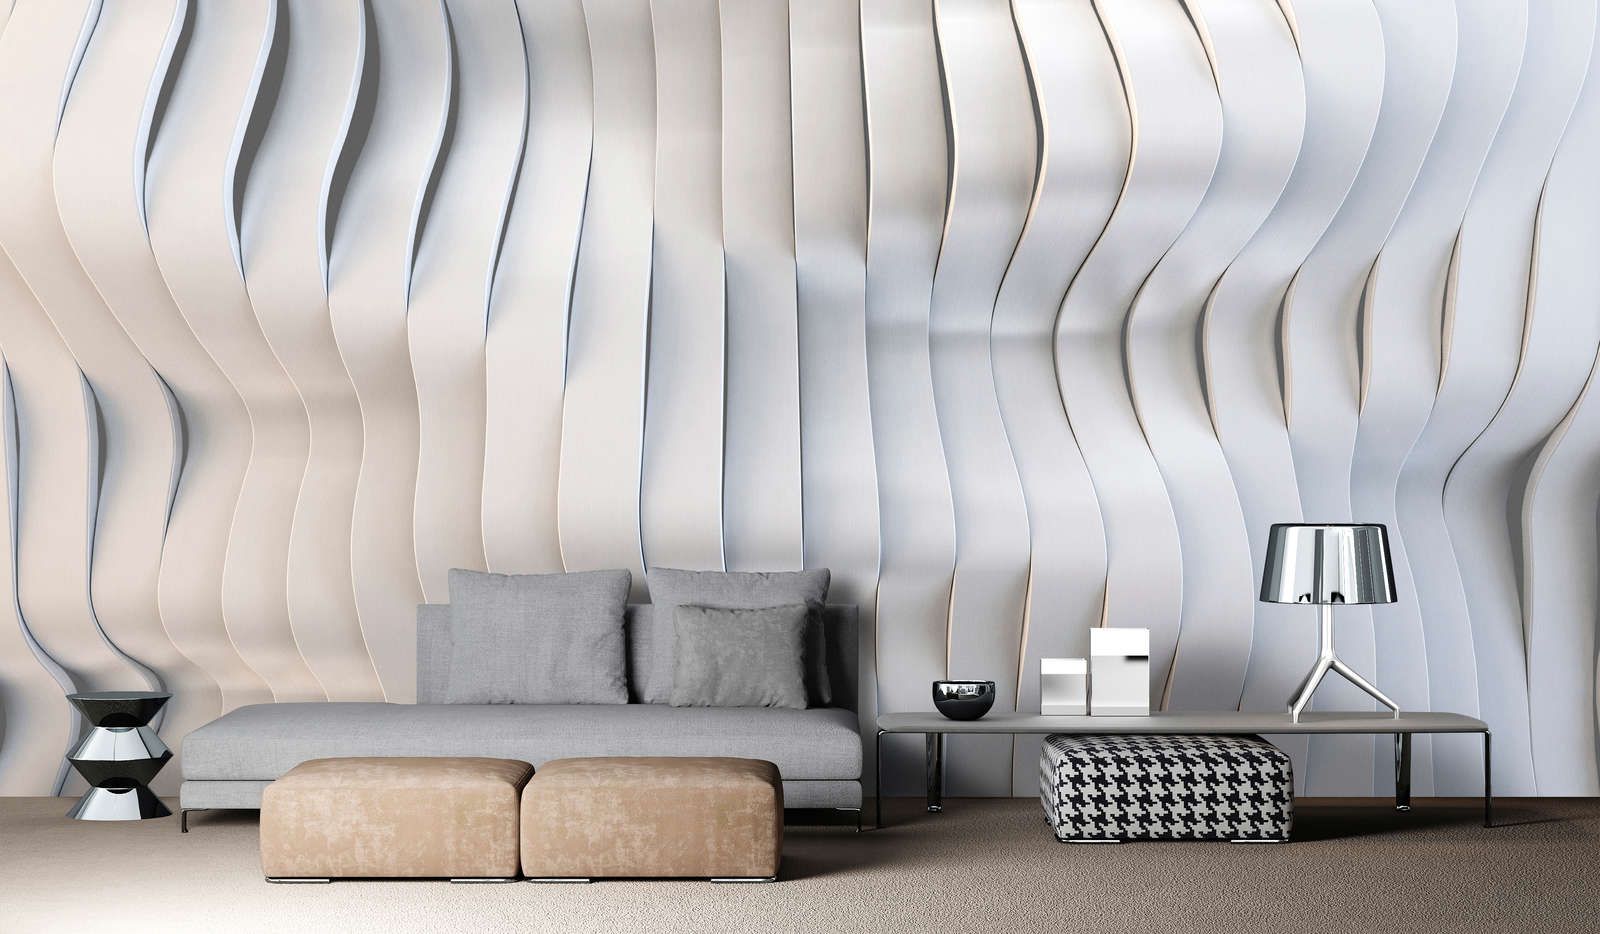             solaris 1 - Digital behang in futuristisch gestroomlijnd ontwerp - Zachte, licht parelmoerglanzende vliesstof
        